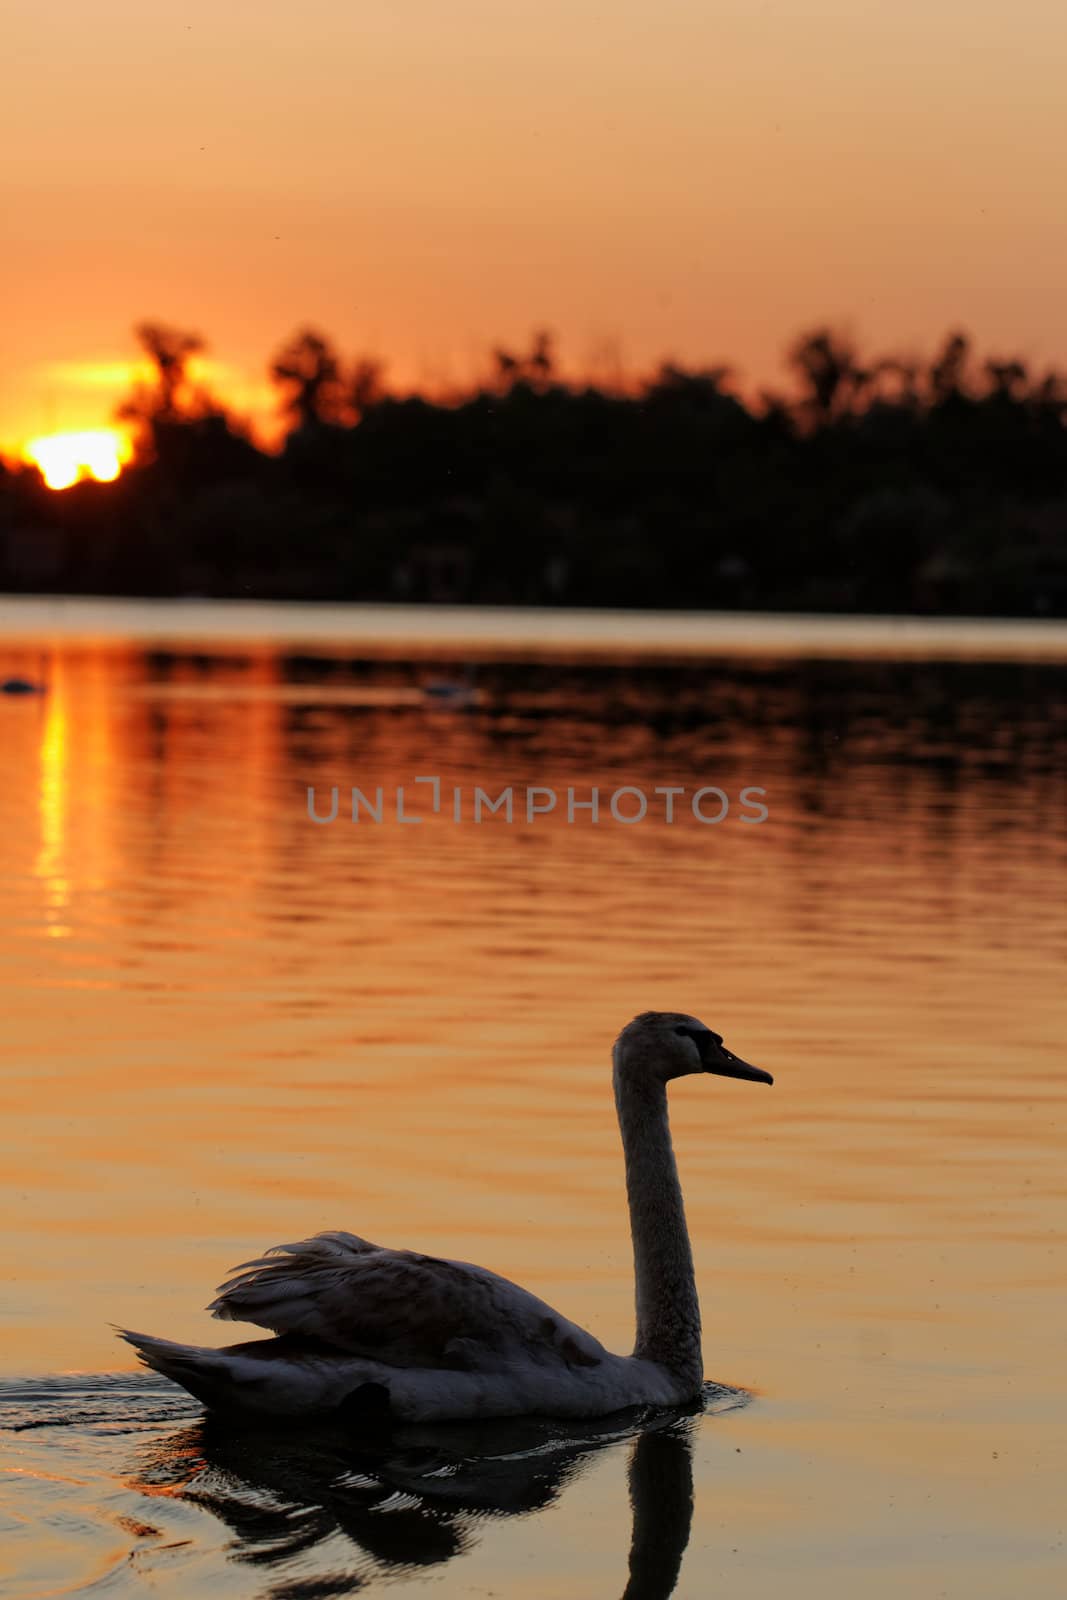 swan on lake at sunset by NagyDodo